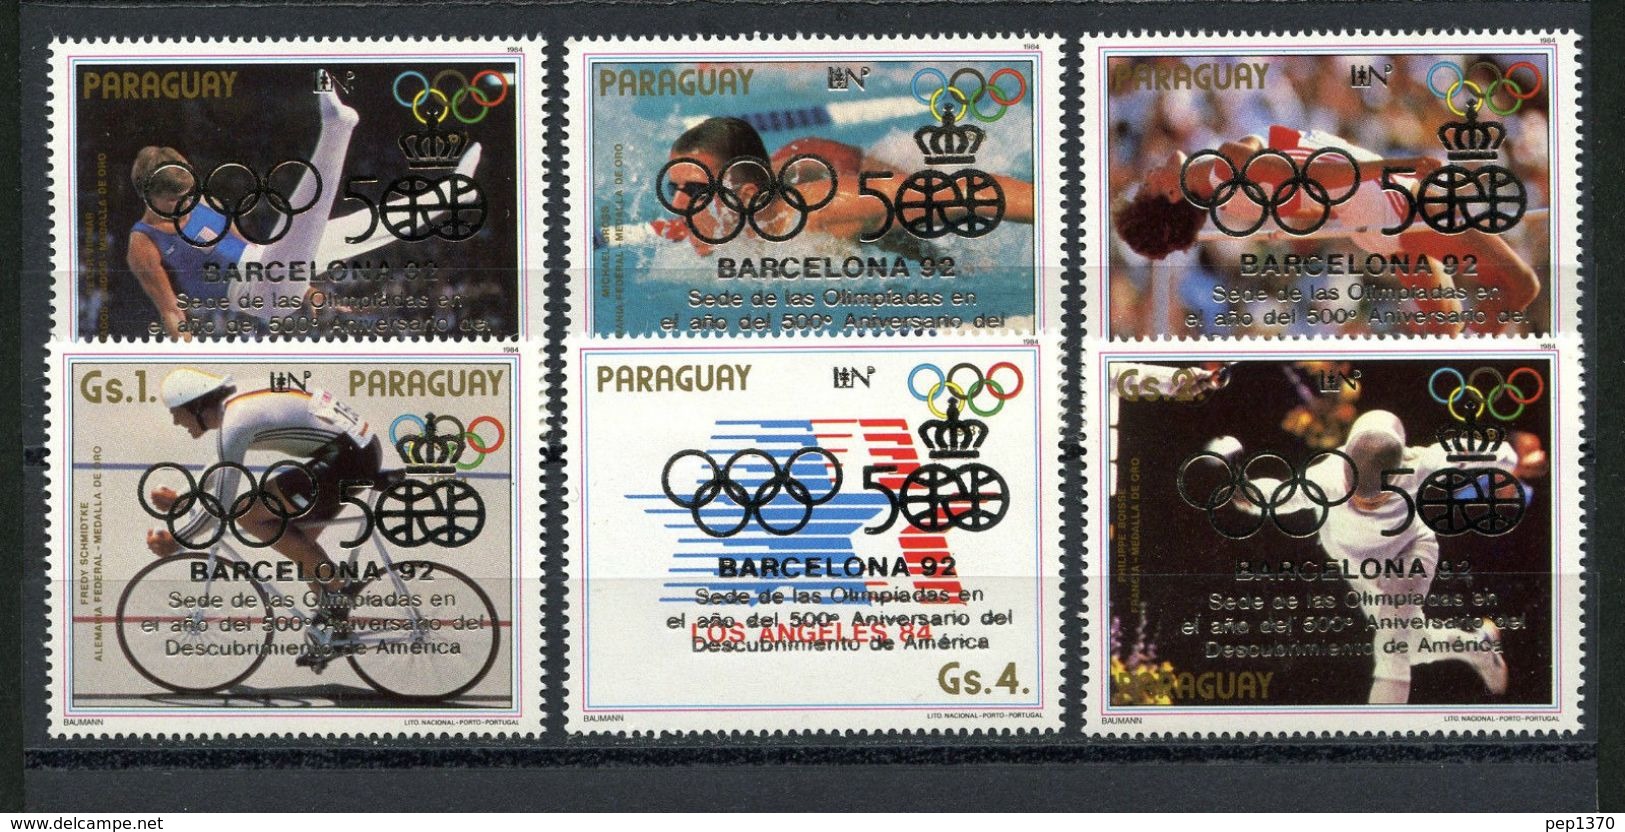 PARAGUAY 1987 - OLYMPICS BARCELONA 92 - YVERT Nº 2280-2285 - MICHEL 4072-4077 - SCOTT 2199 - OVERPRINT 500 ANIVERSARY - Jumping